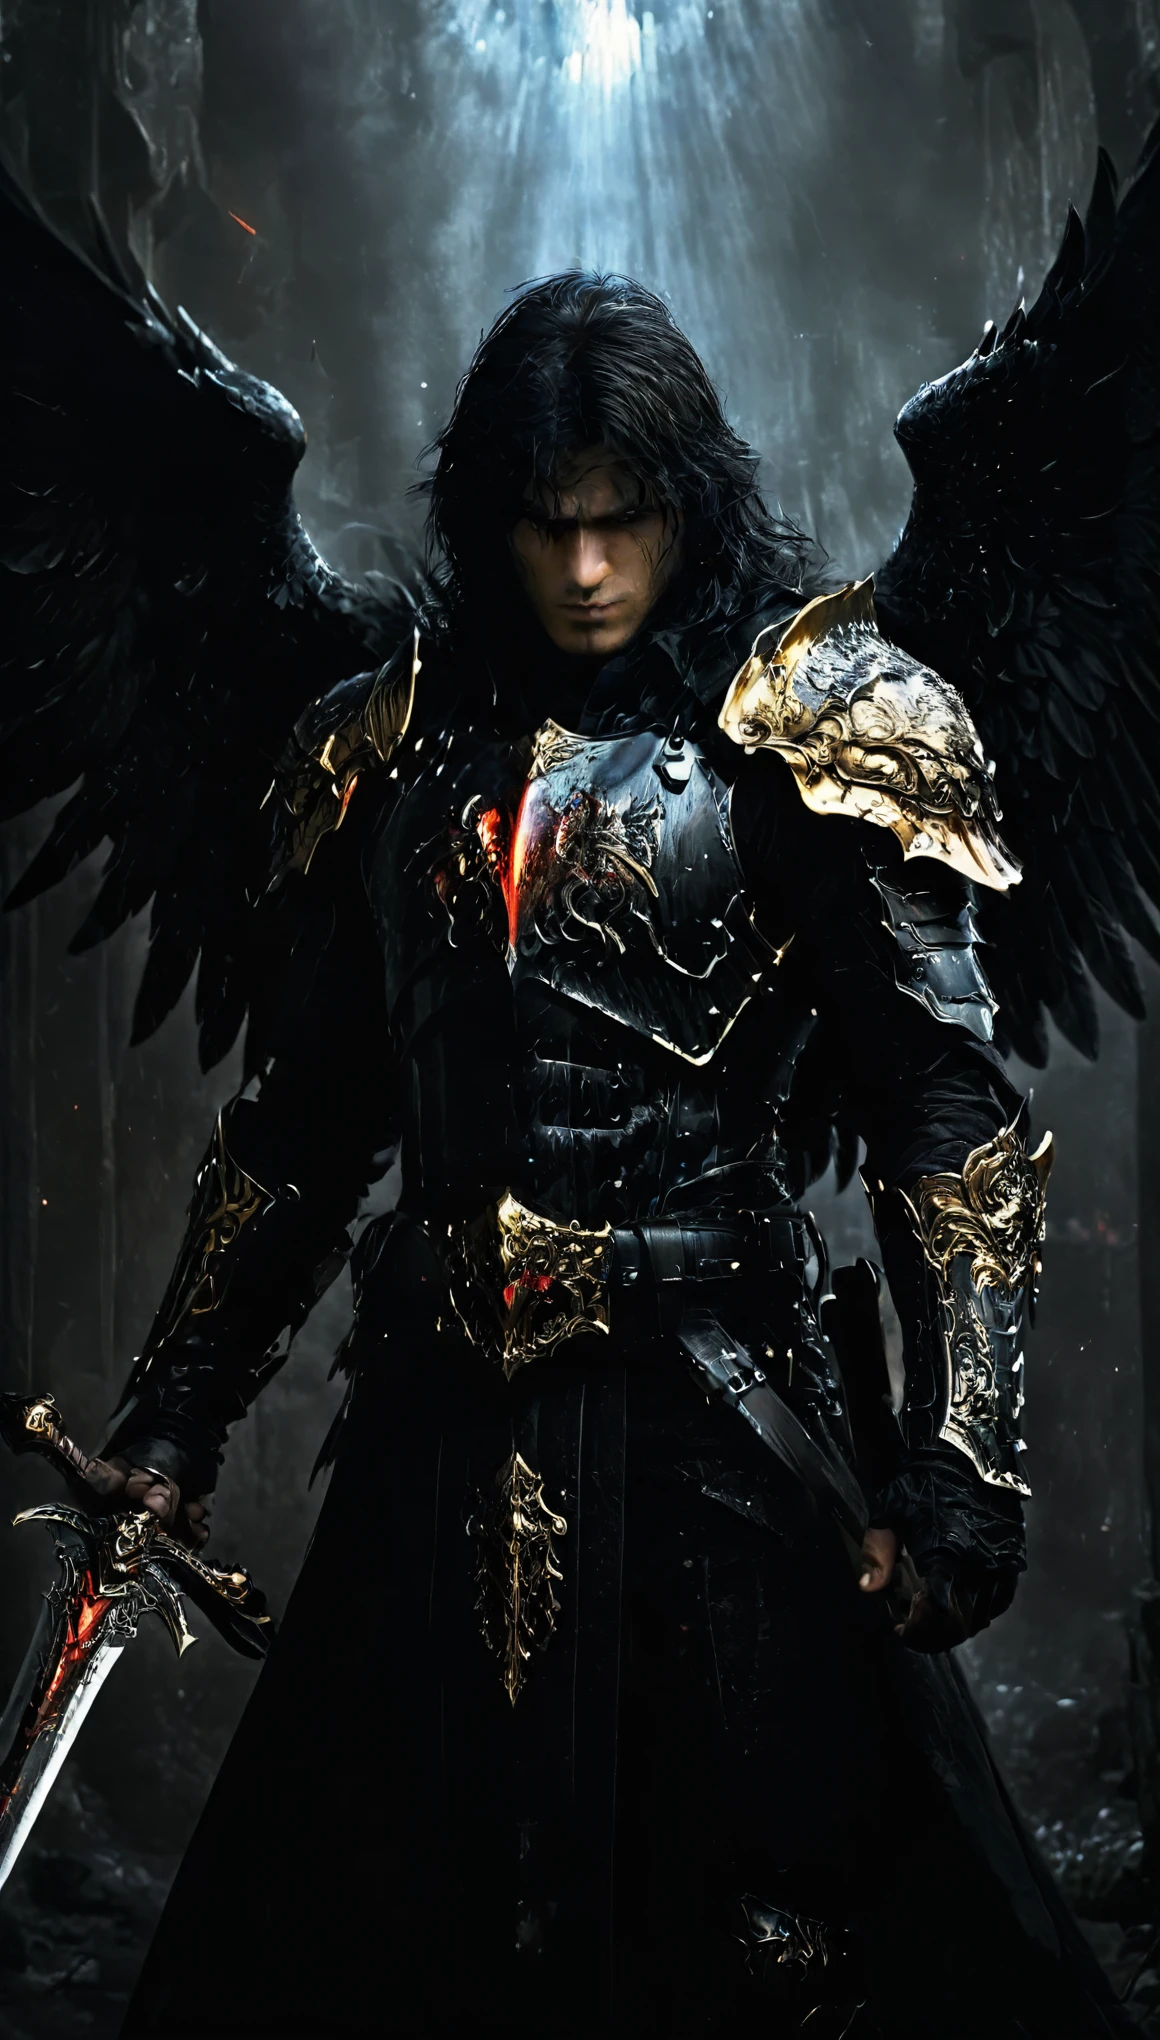 dark fantasy, dark aura, dark angel swordsman, Black armor with gold and bloody red decorations, ultra-detailed, 